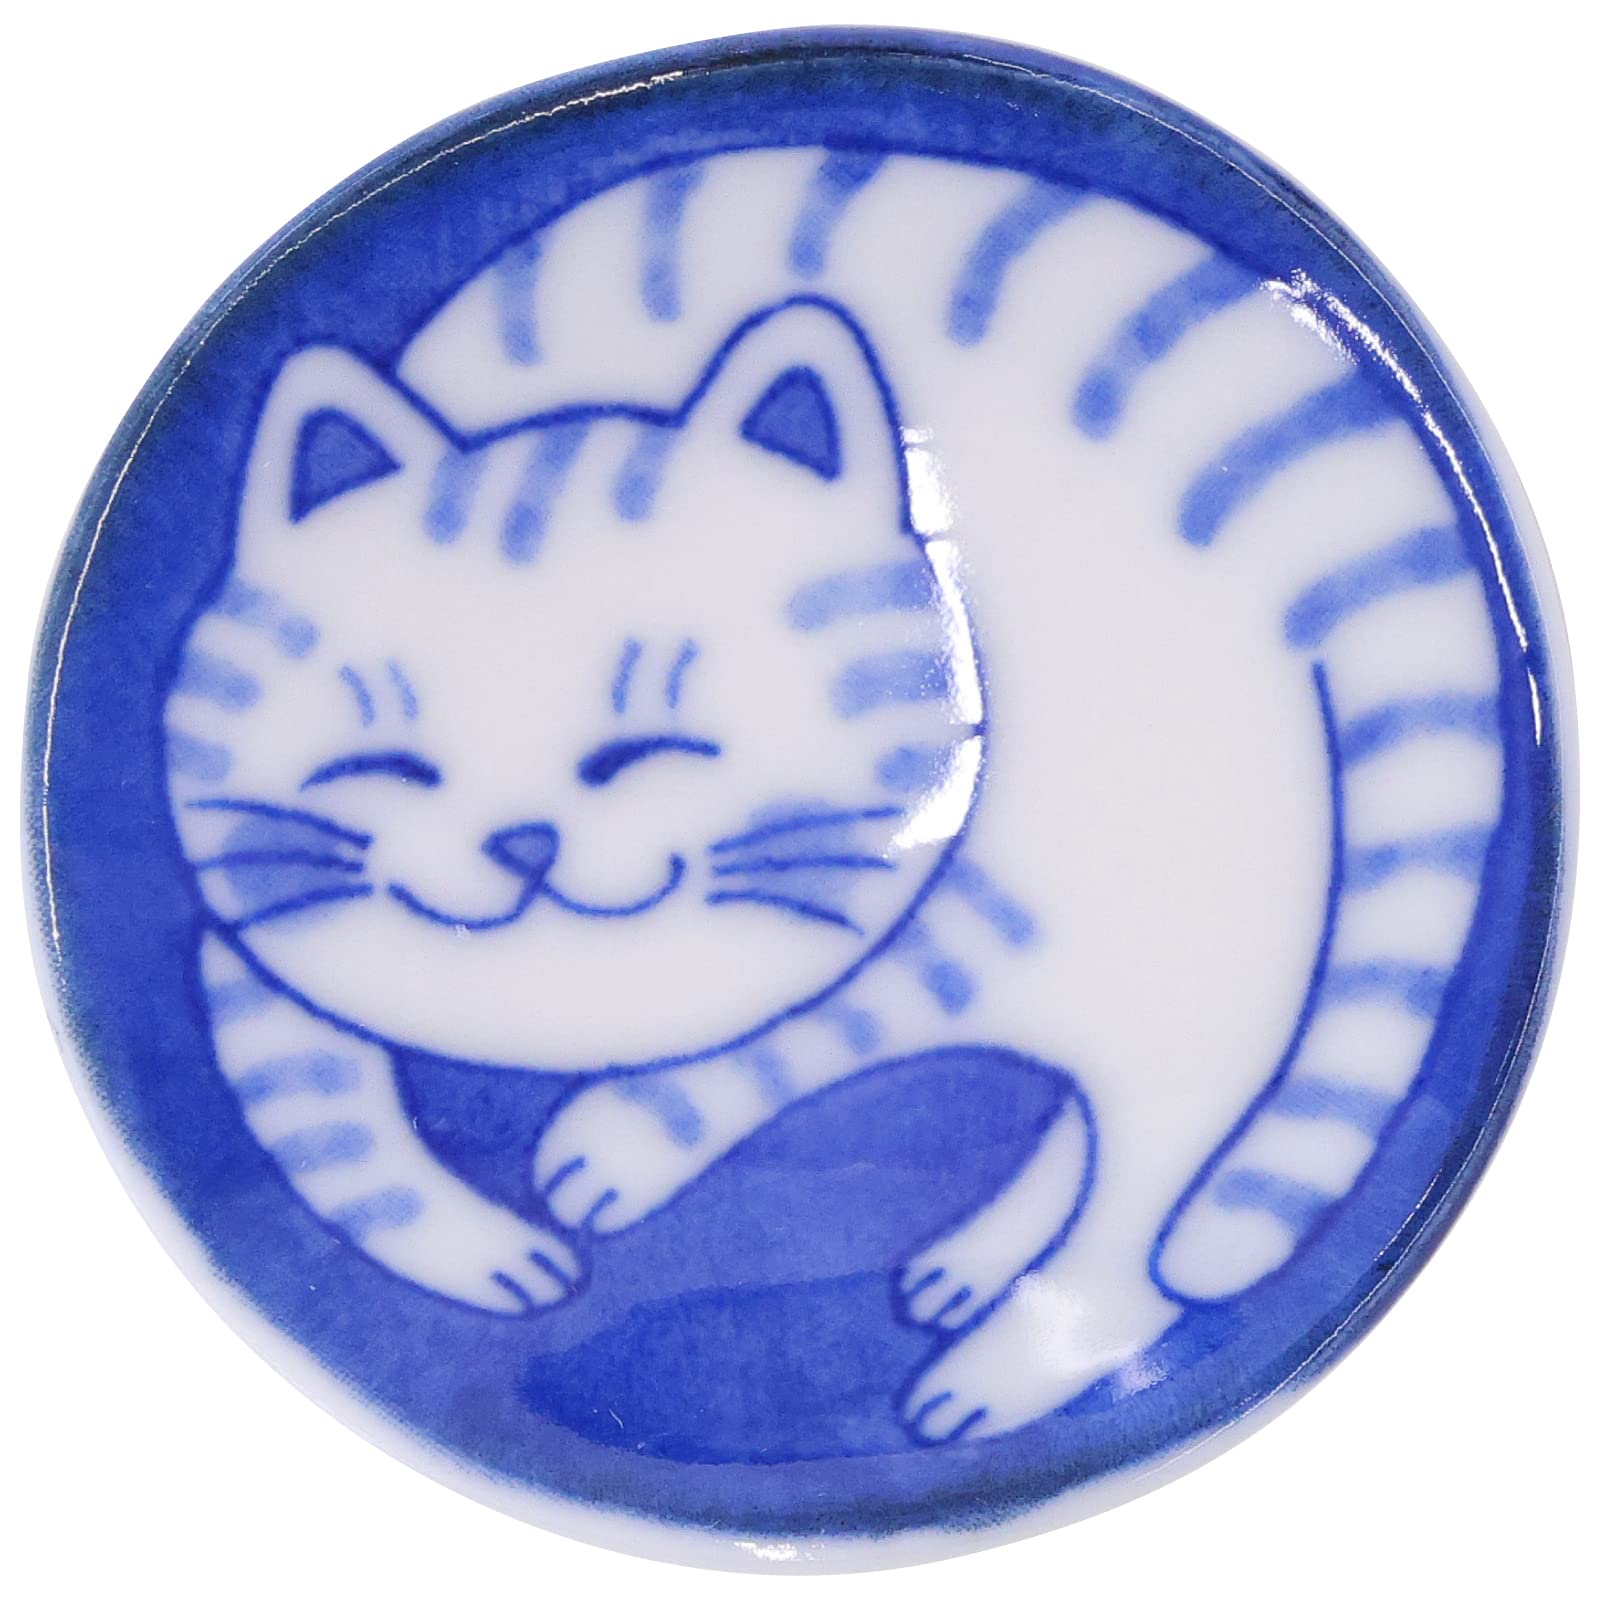 MIno Ware Chopstick Rest set, Kawaii Cute Cats Design, Japanese Ceramic Ware, Set of 4